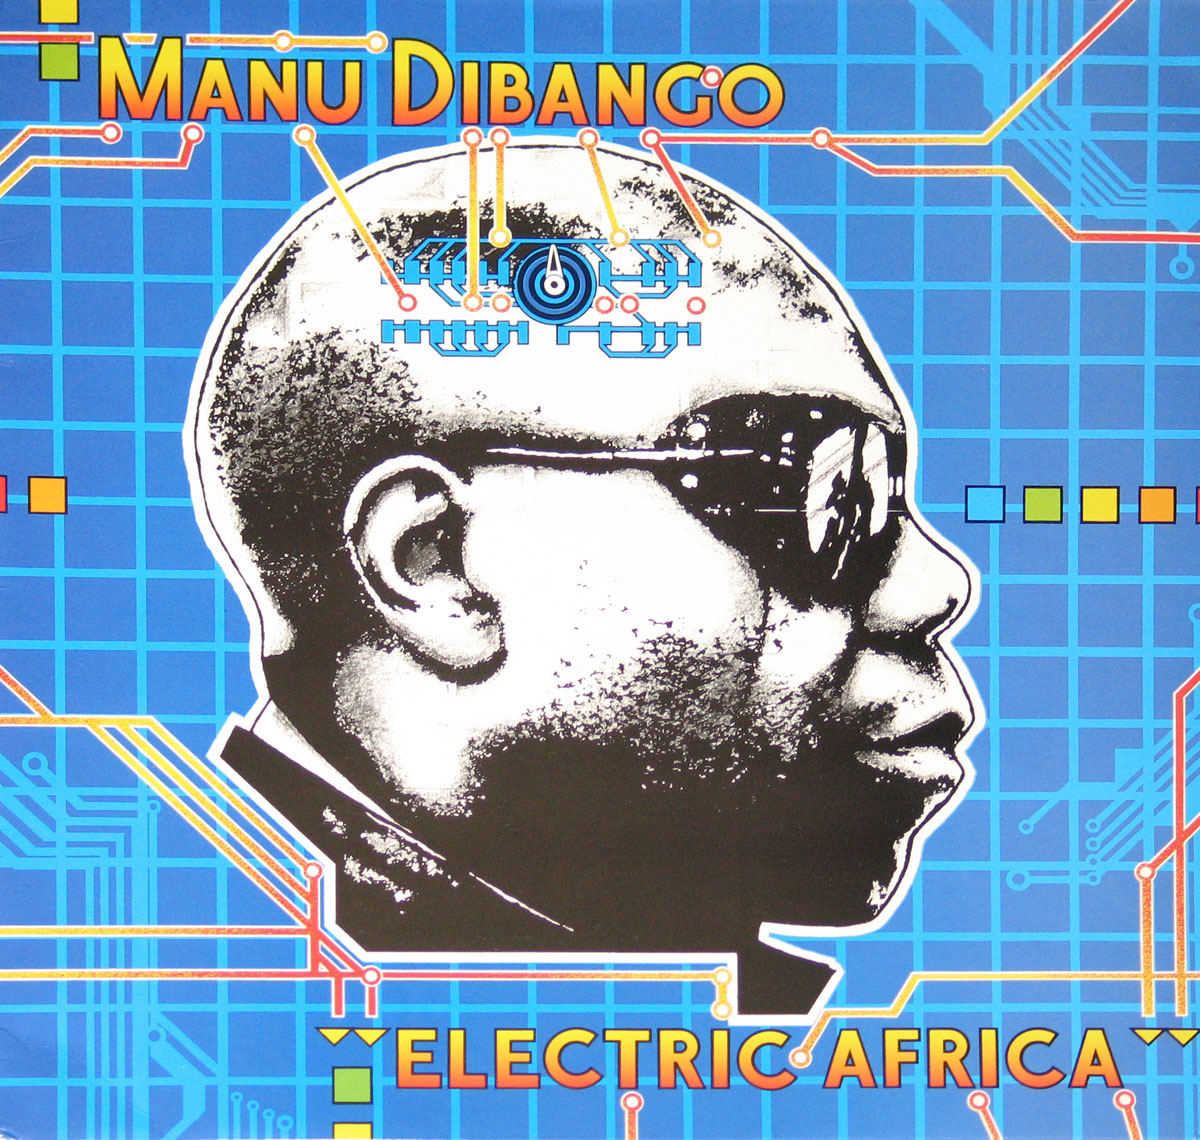 High Resolution Photo MANU DIBANGo Electric Africa 